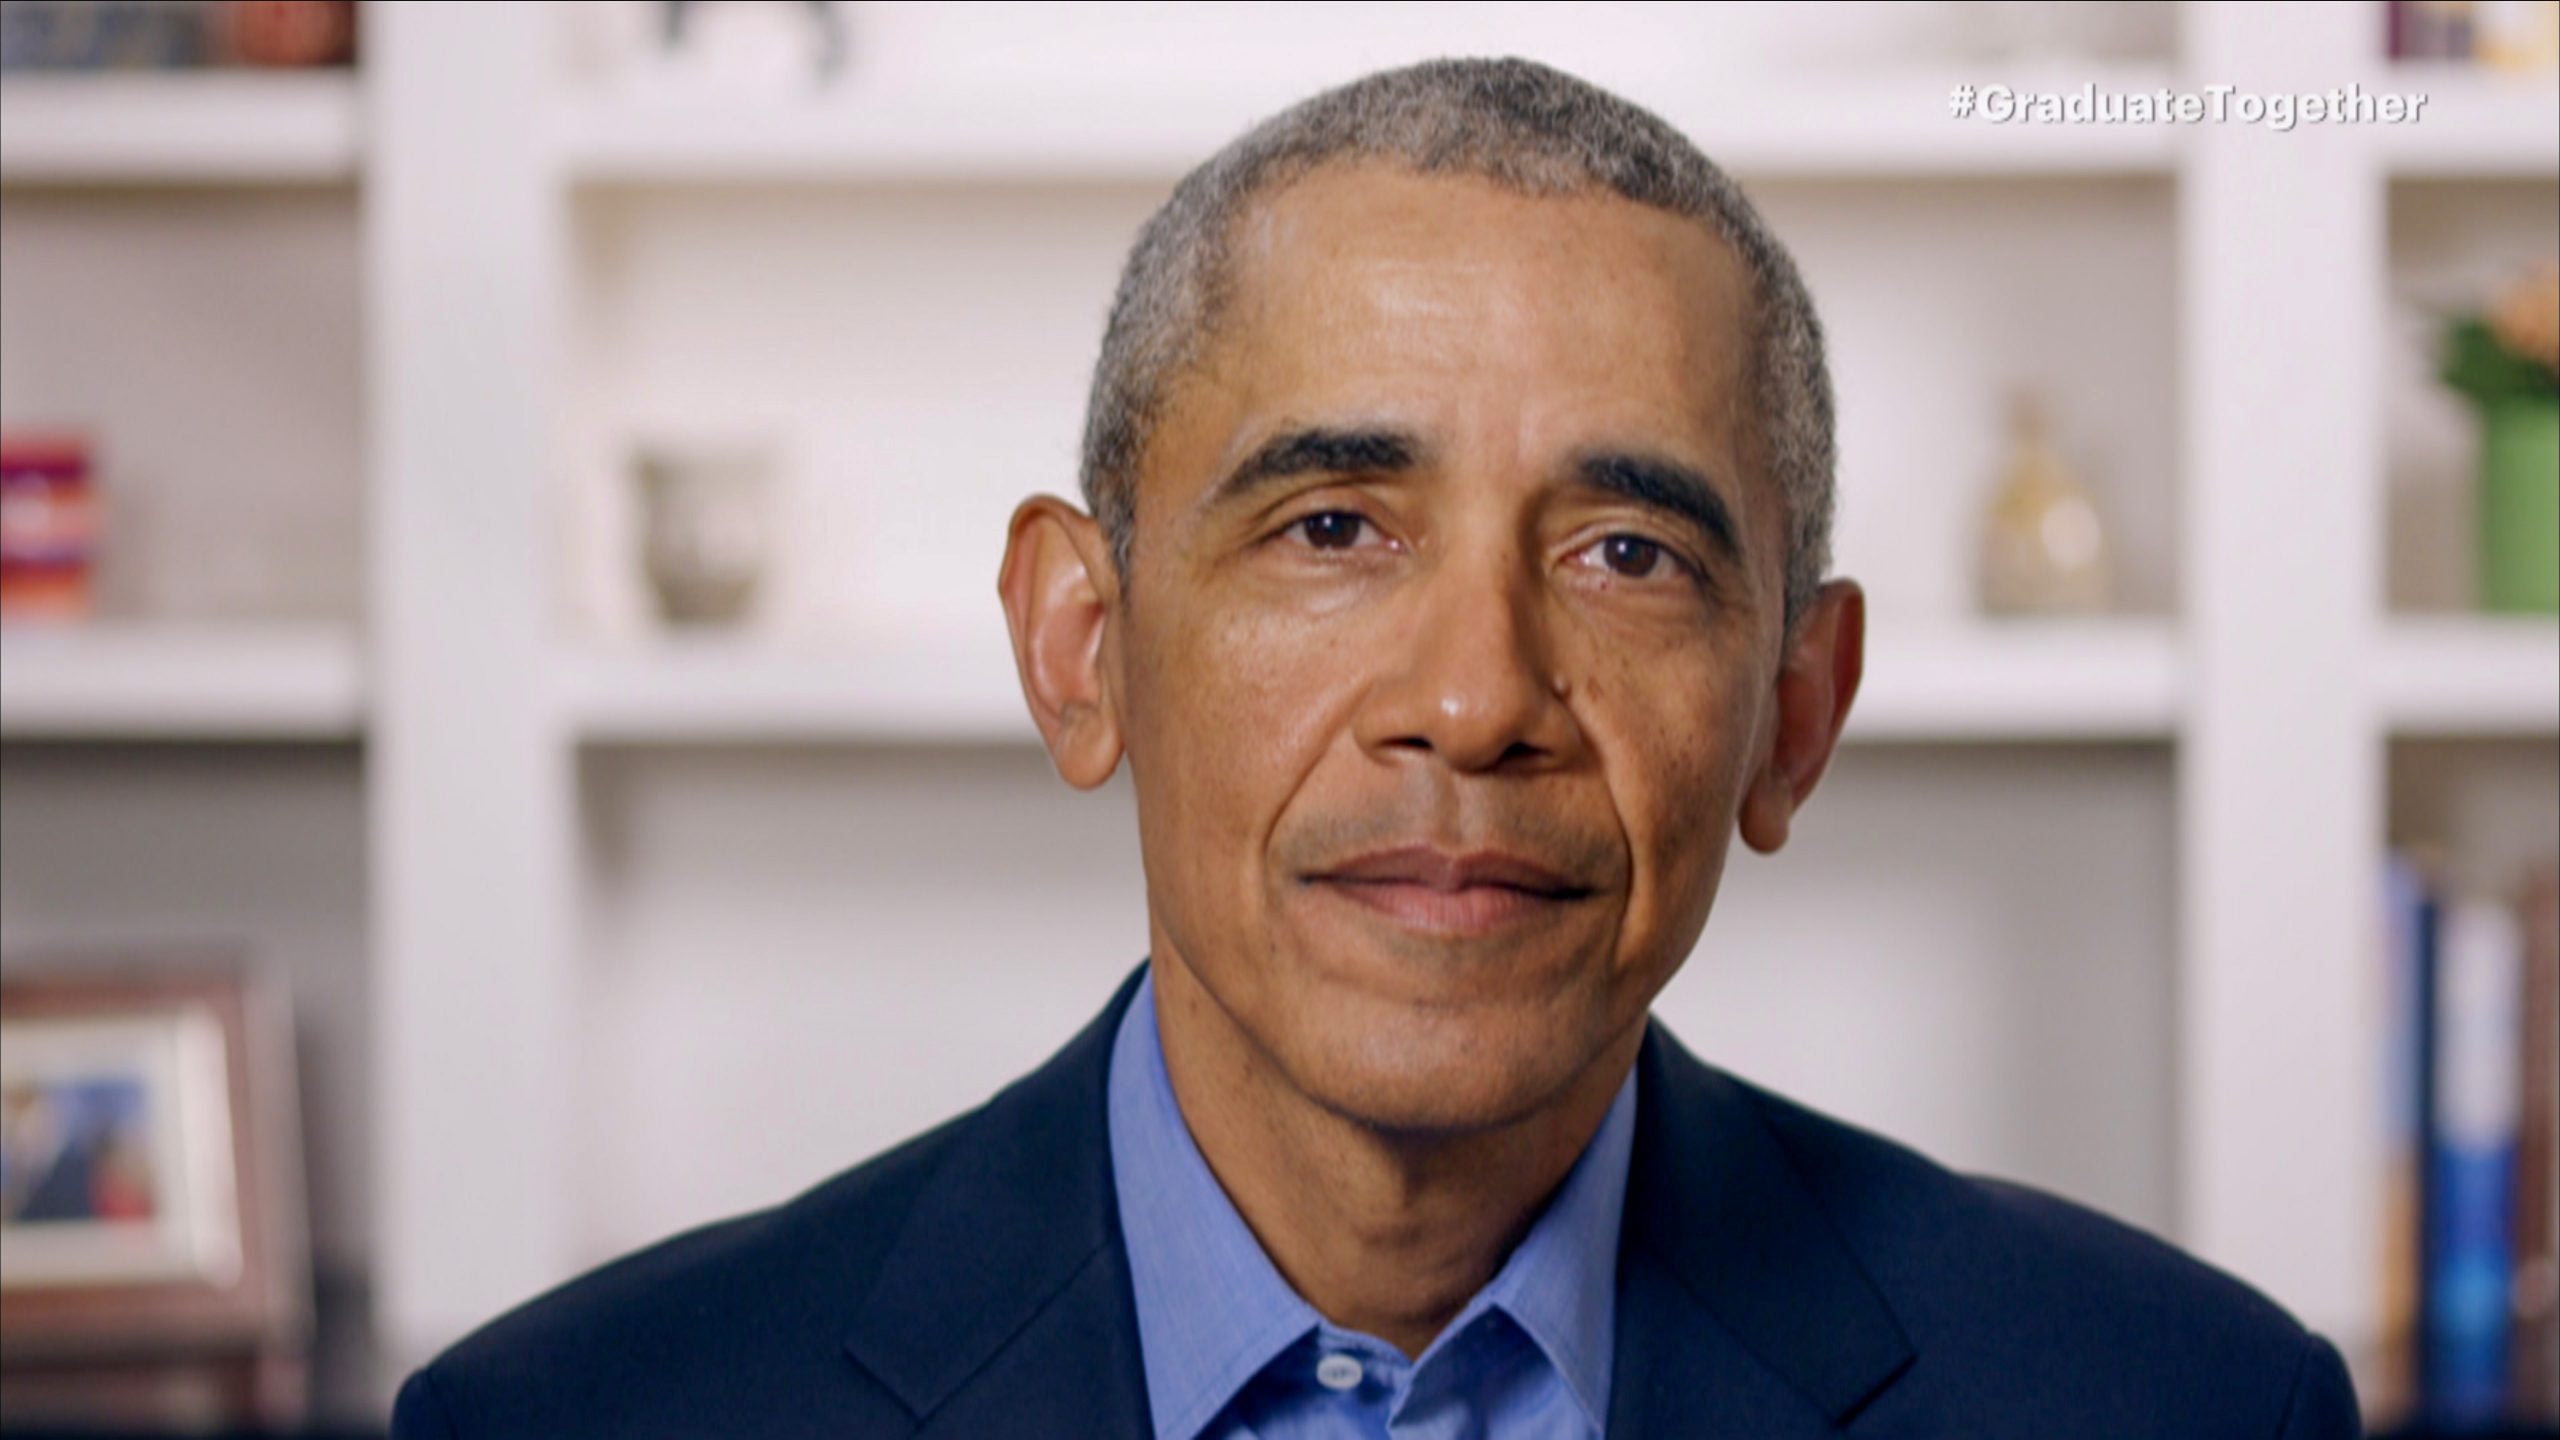 Barack Obama Speaks Out On George Floyd's Killing